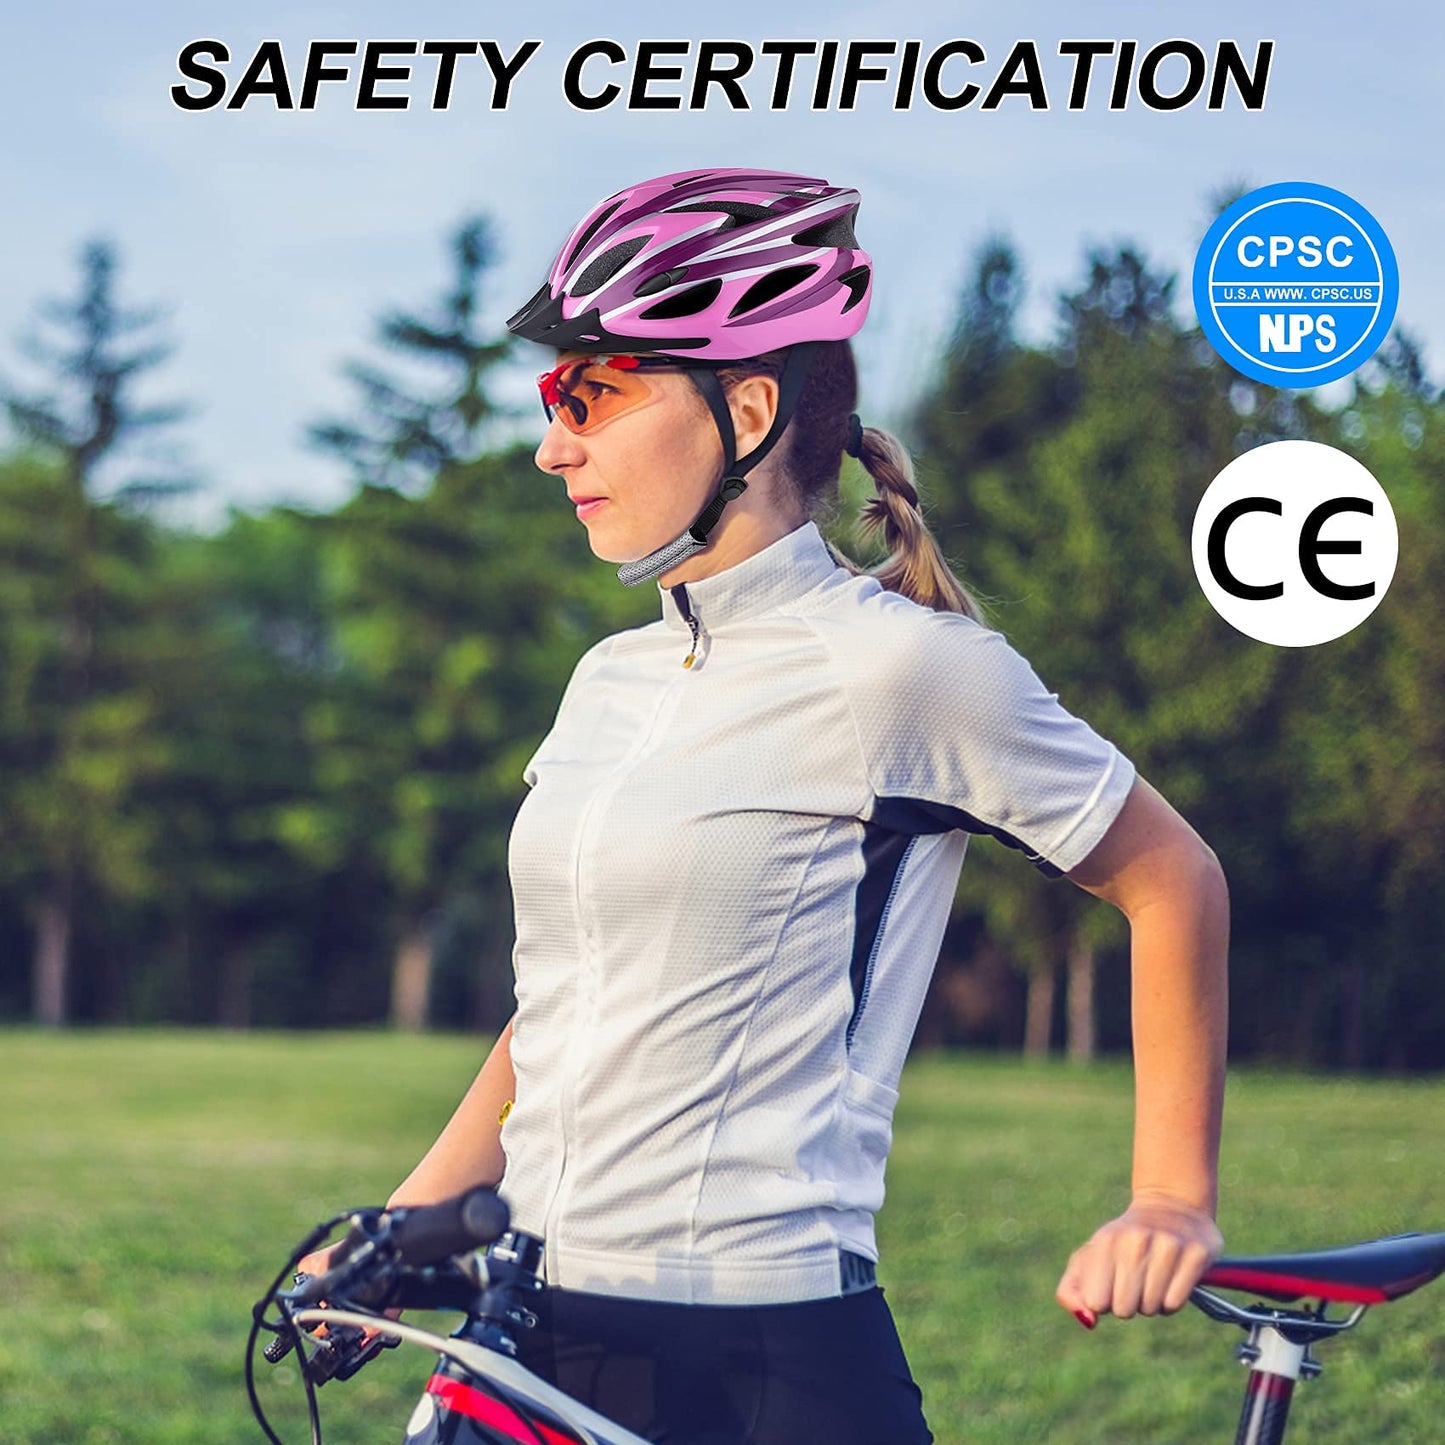 Zacro Adult Bike Helmet Lightweight - Bike Helmet for Men Women Comfort with Pads&Visor, Certified Bicycle Helmet for Adults Youth Mountain Road Biker (Pink Plus Purple, Universal Adult(54-62 cm))